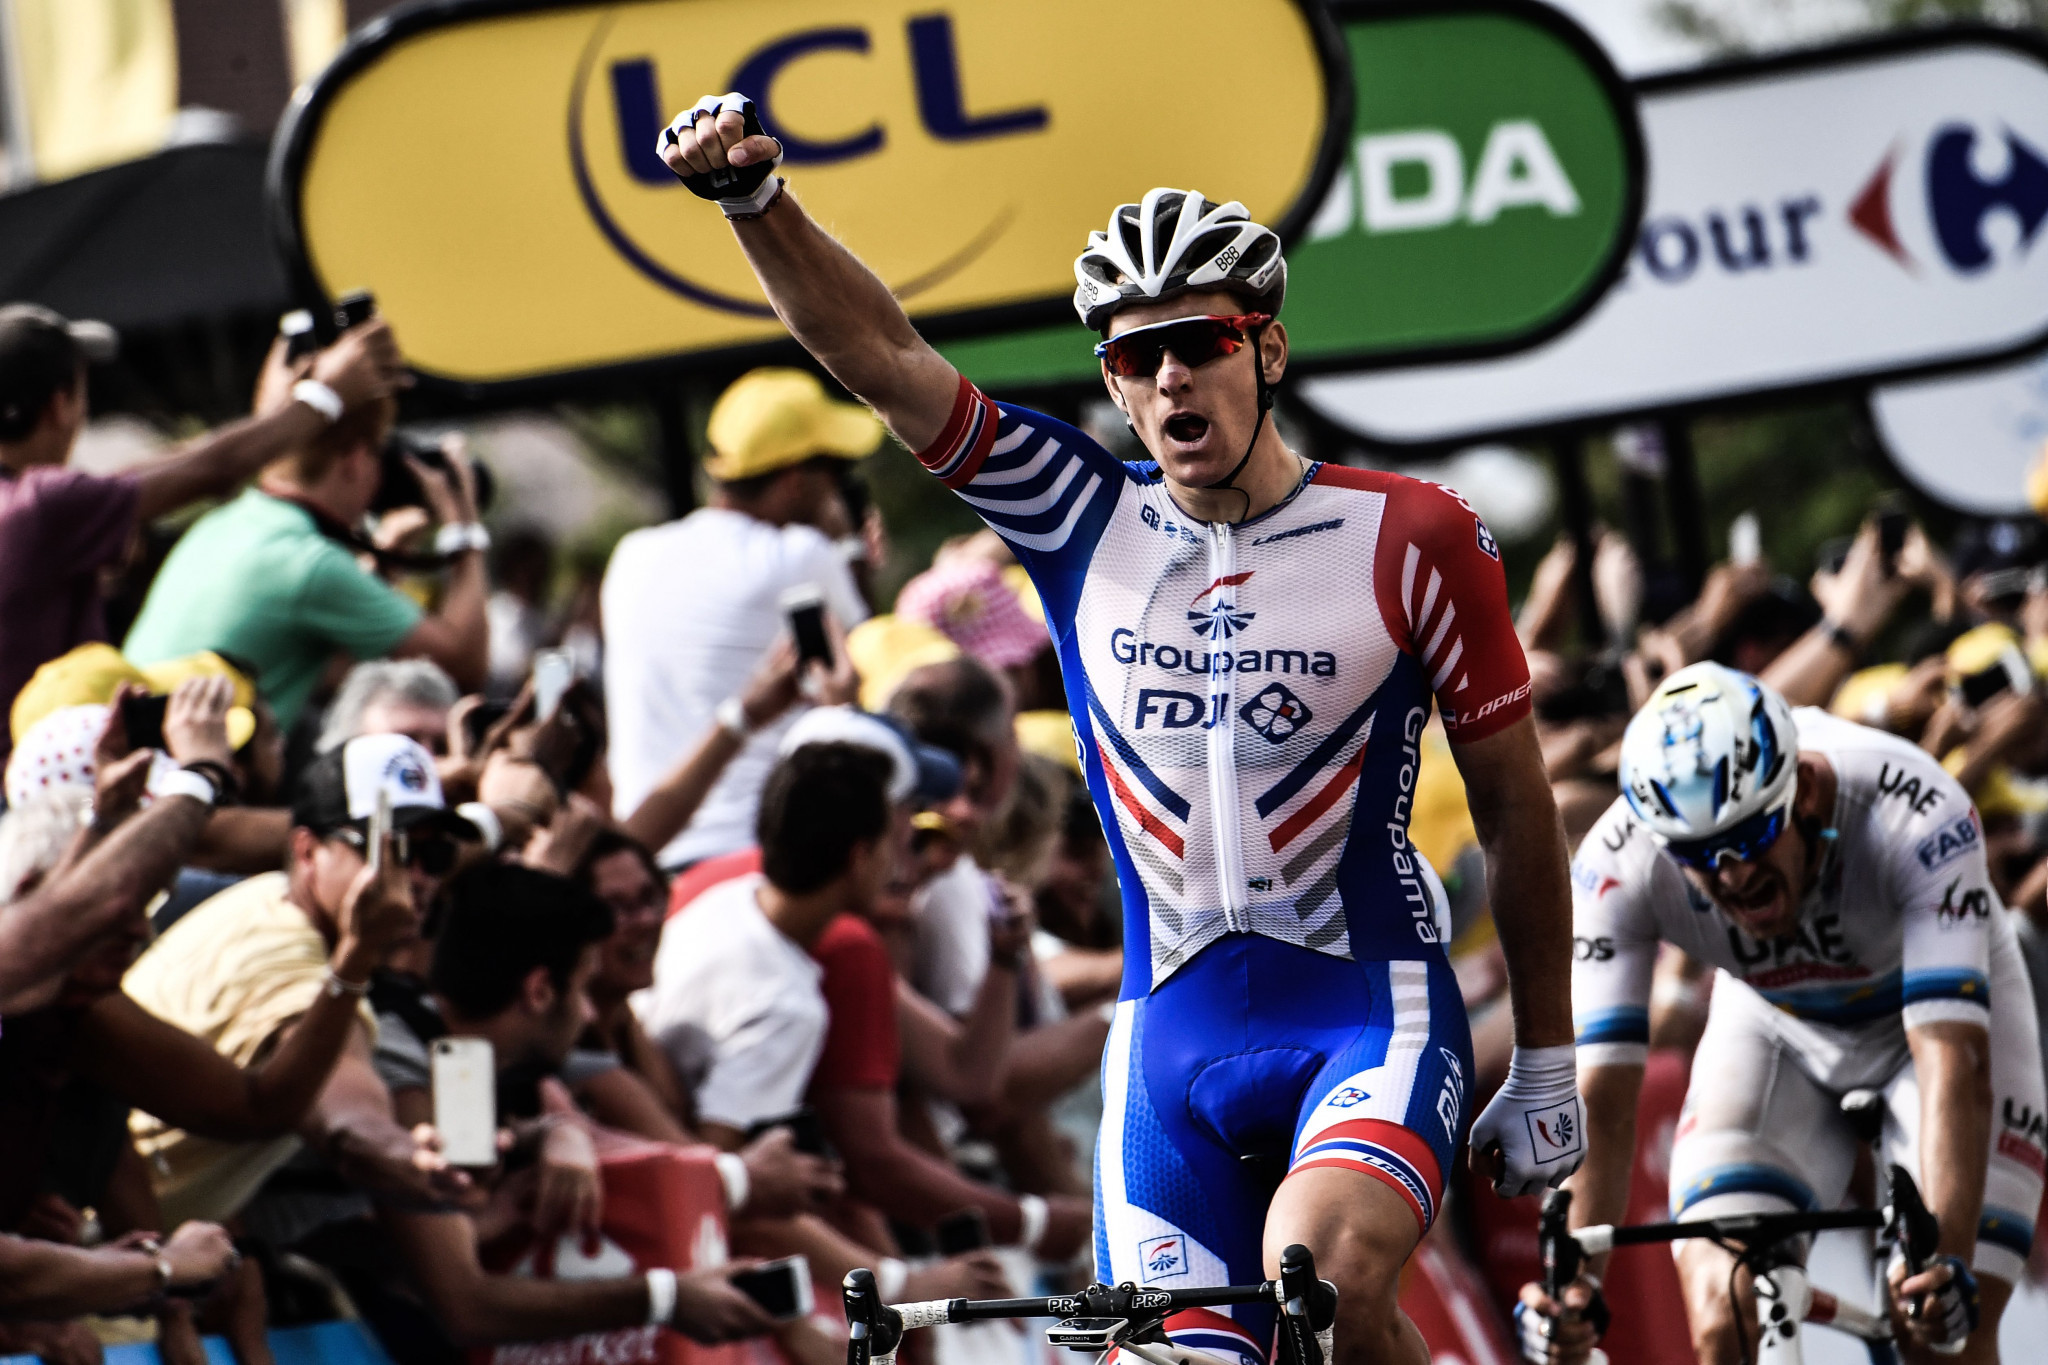 Demare delivers on penultimate sprint stage of Tour de France